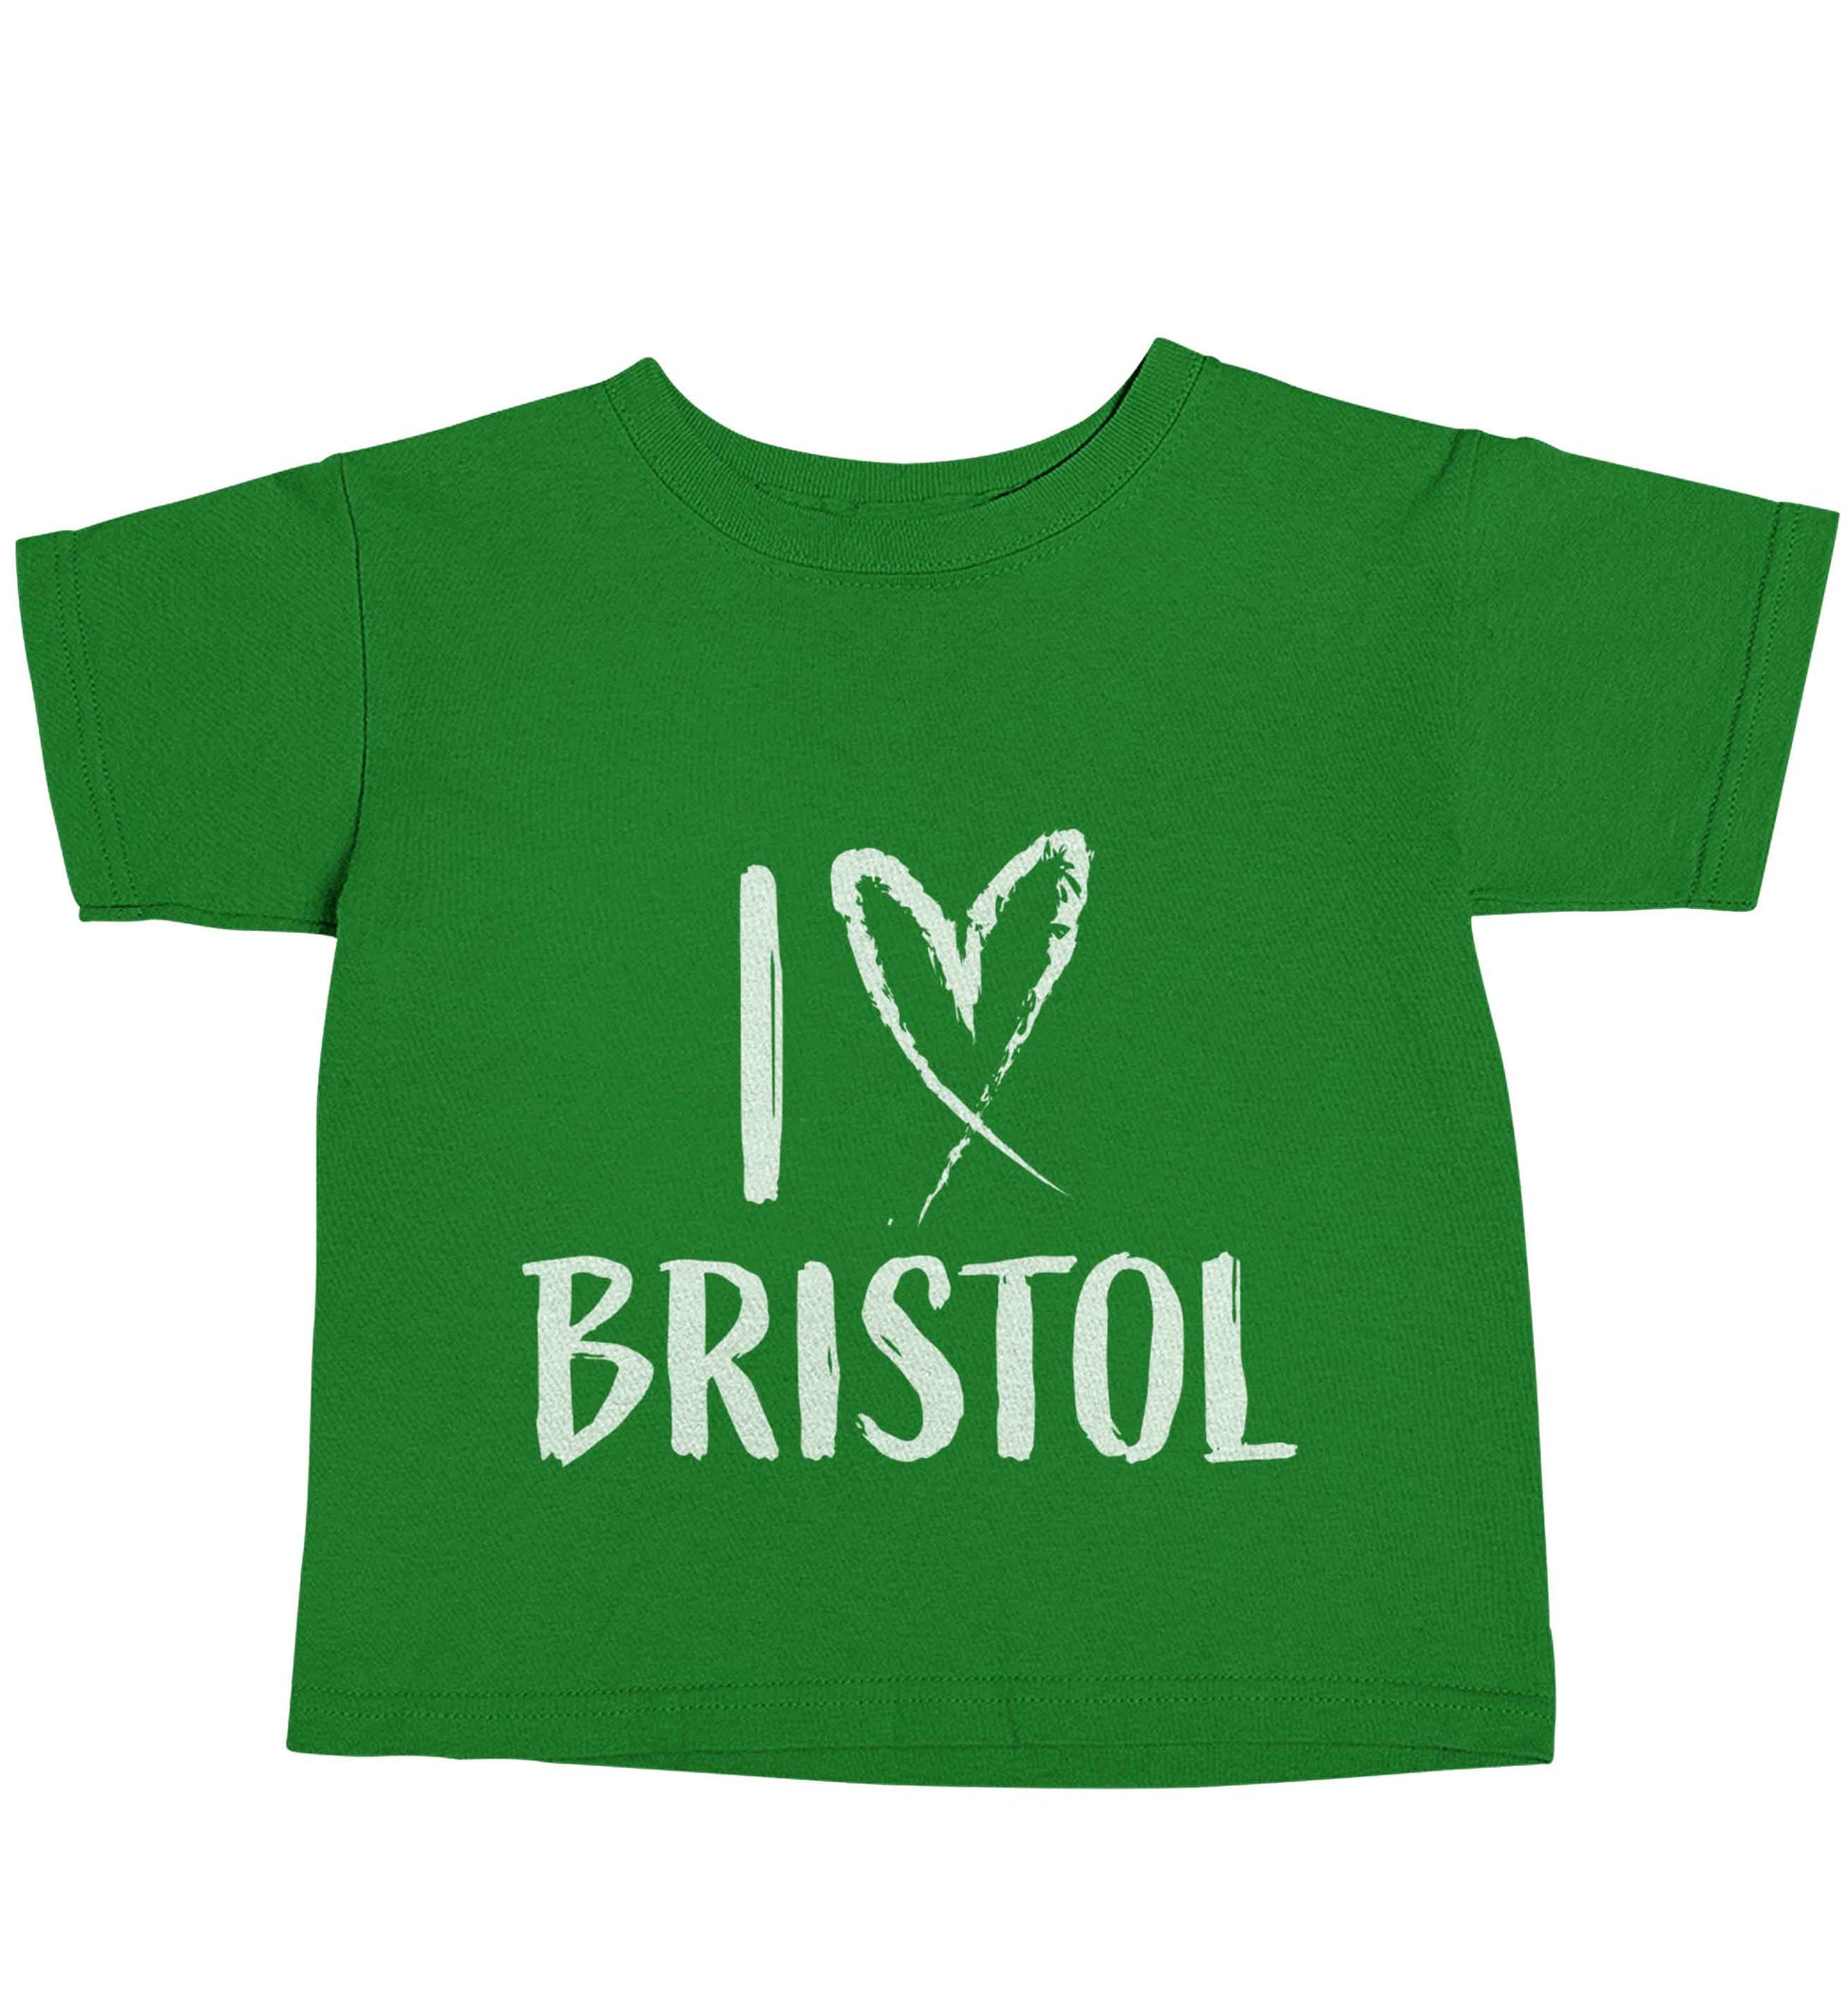 I love Bristol green baby toddler Tshirt 2 Years